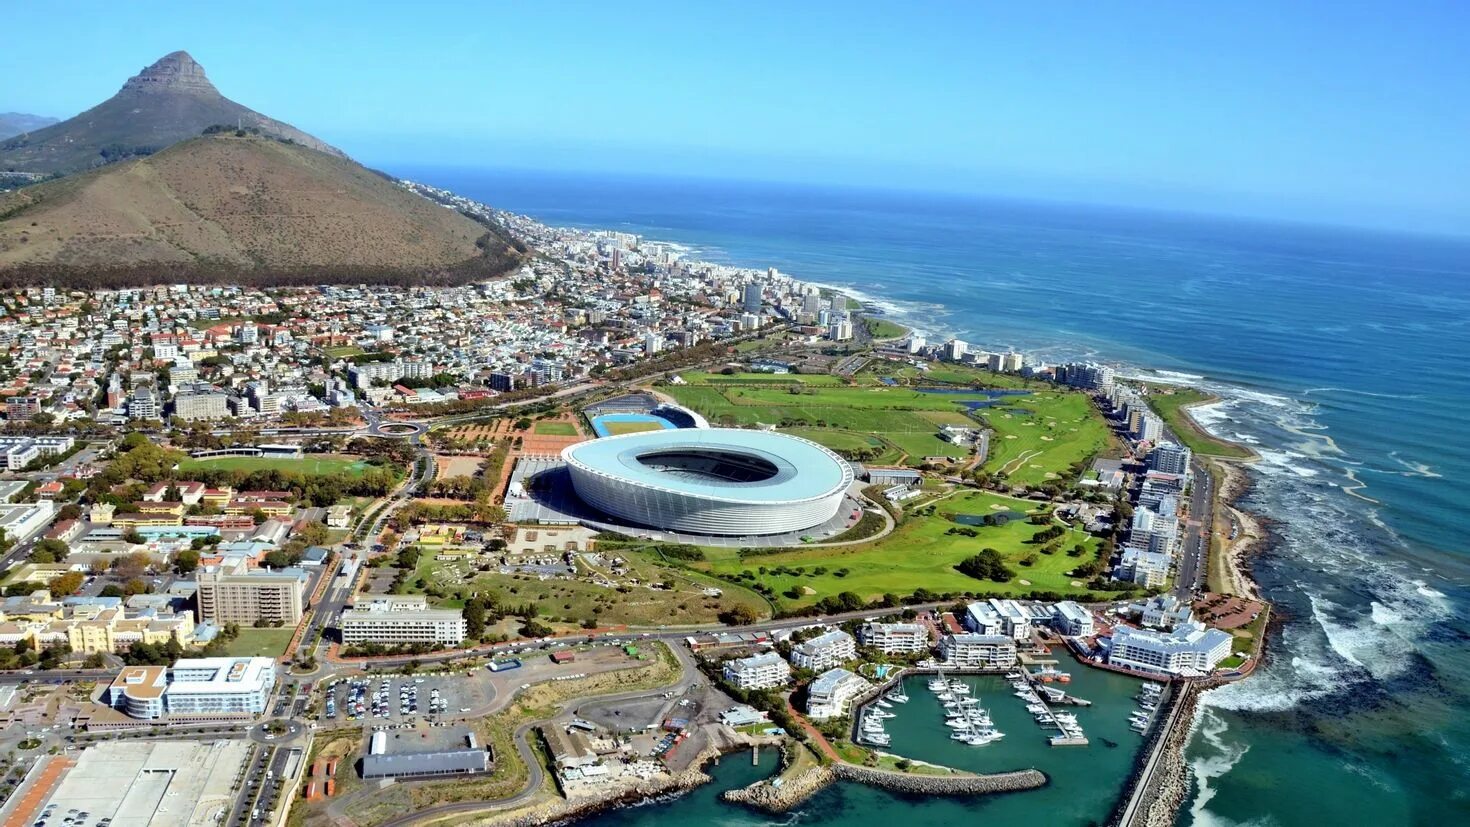 Africa city. ЮАР столица Кейптаун. Южная Африканская Республика города Кейптауна. Кейп (ЮАР). Кейптаун, Южная Африка Кейптаун, Южная Африка.